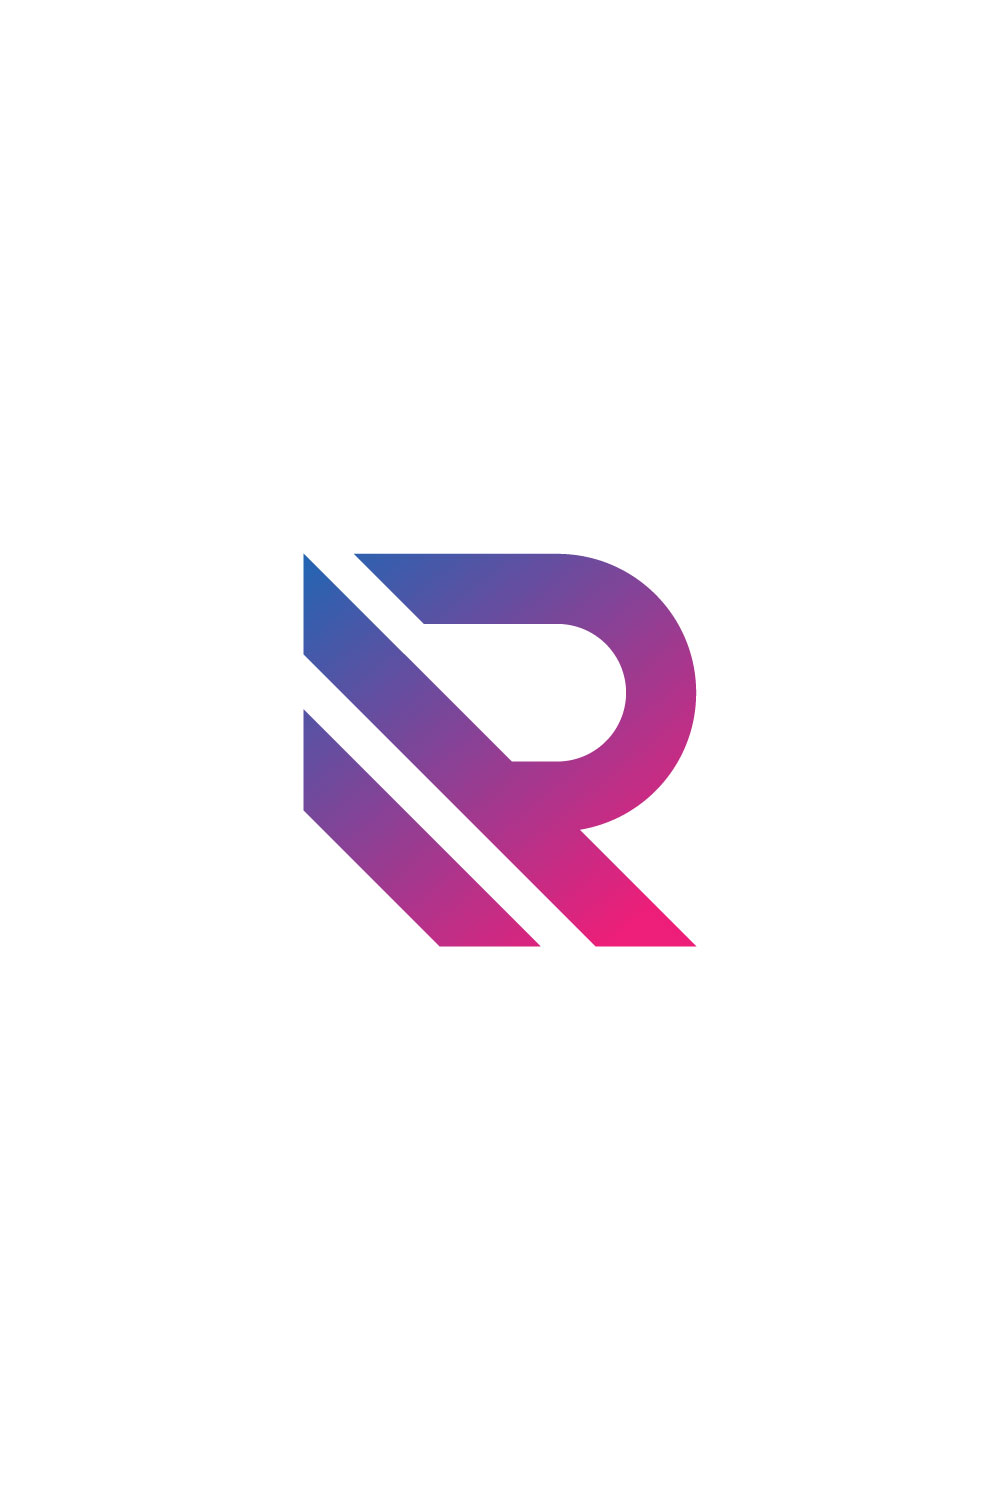 R Logo Design Pinterest image.